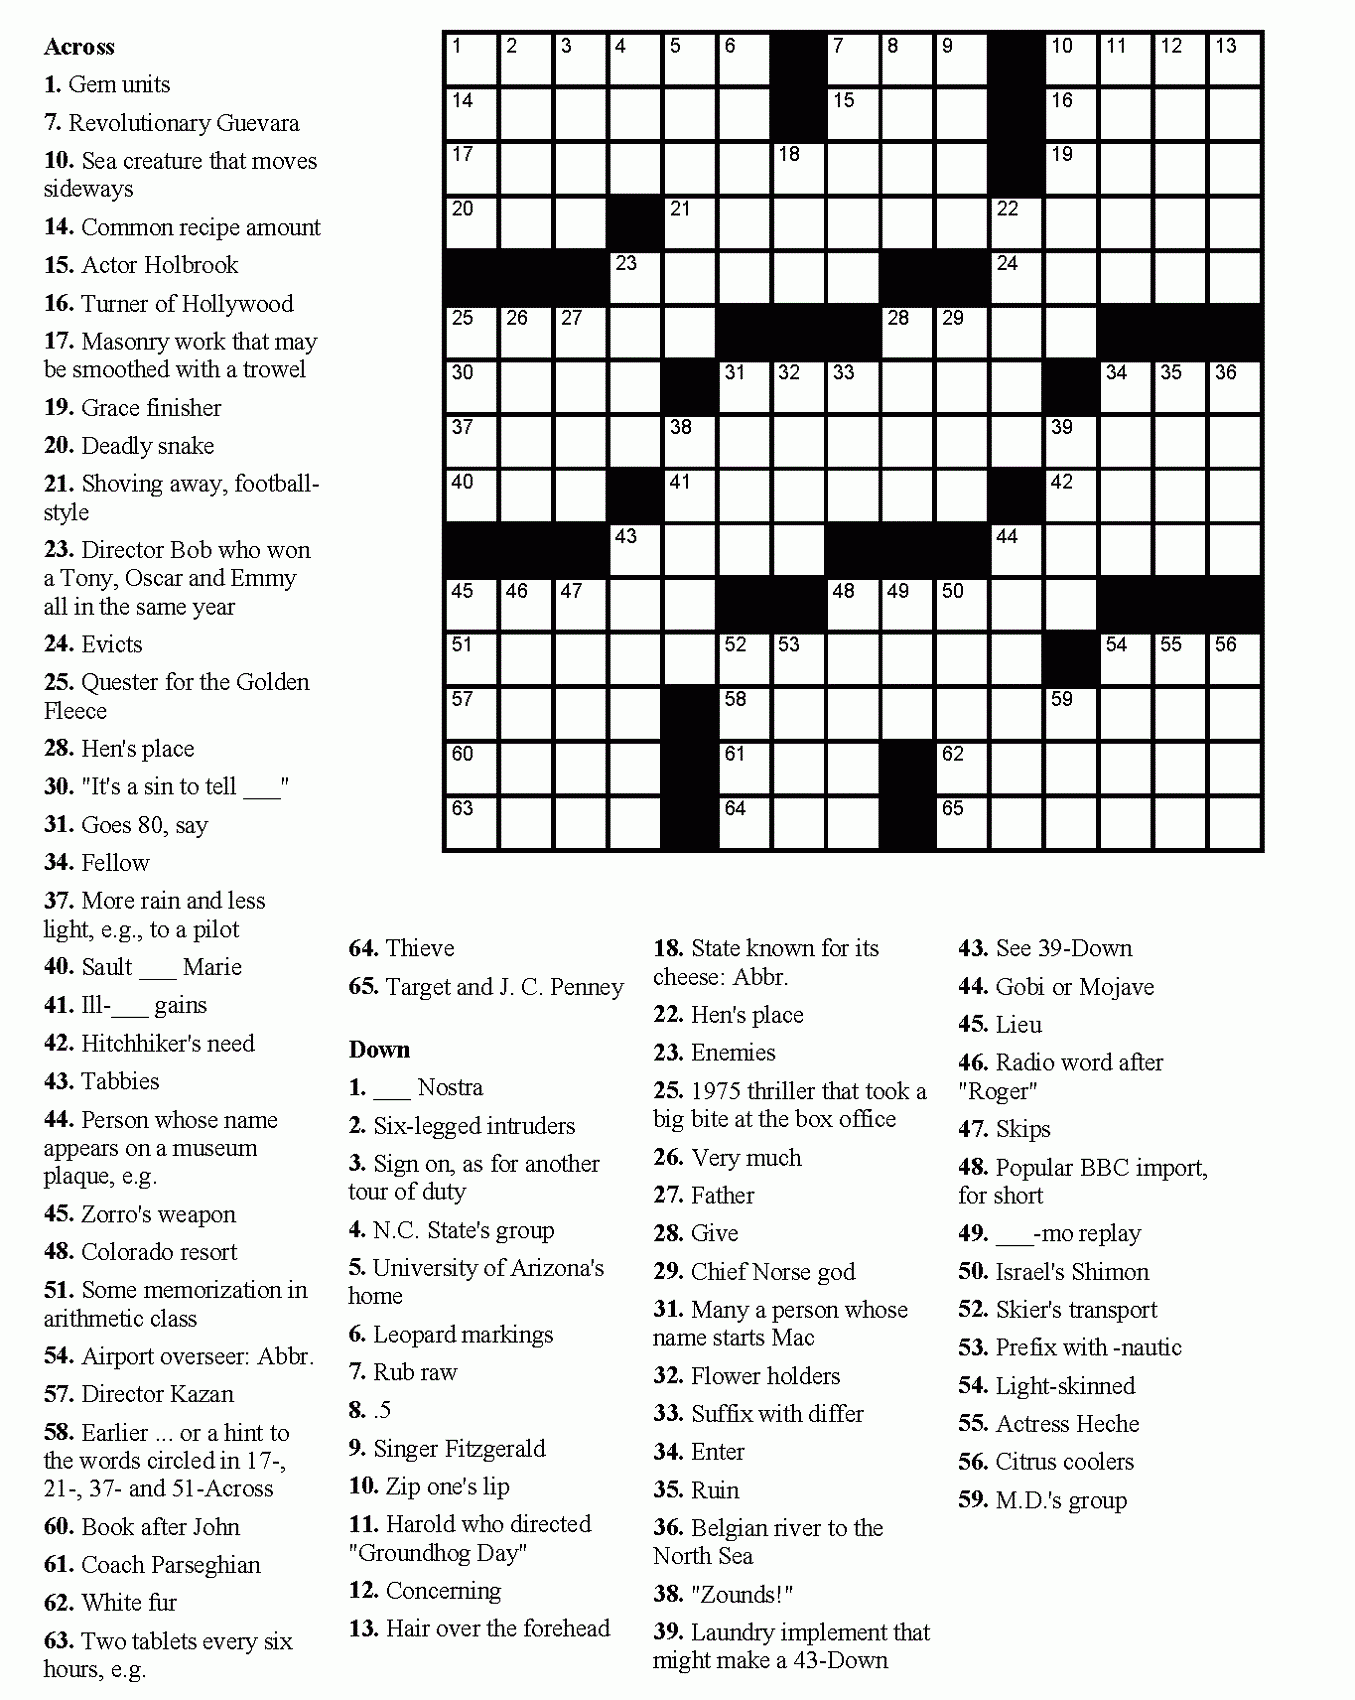 Free Printable Movie Trivia Crossword Puzzles